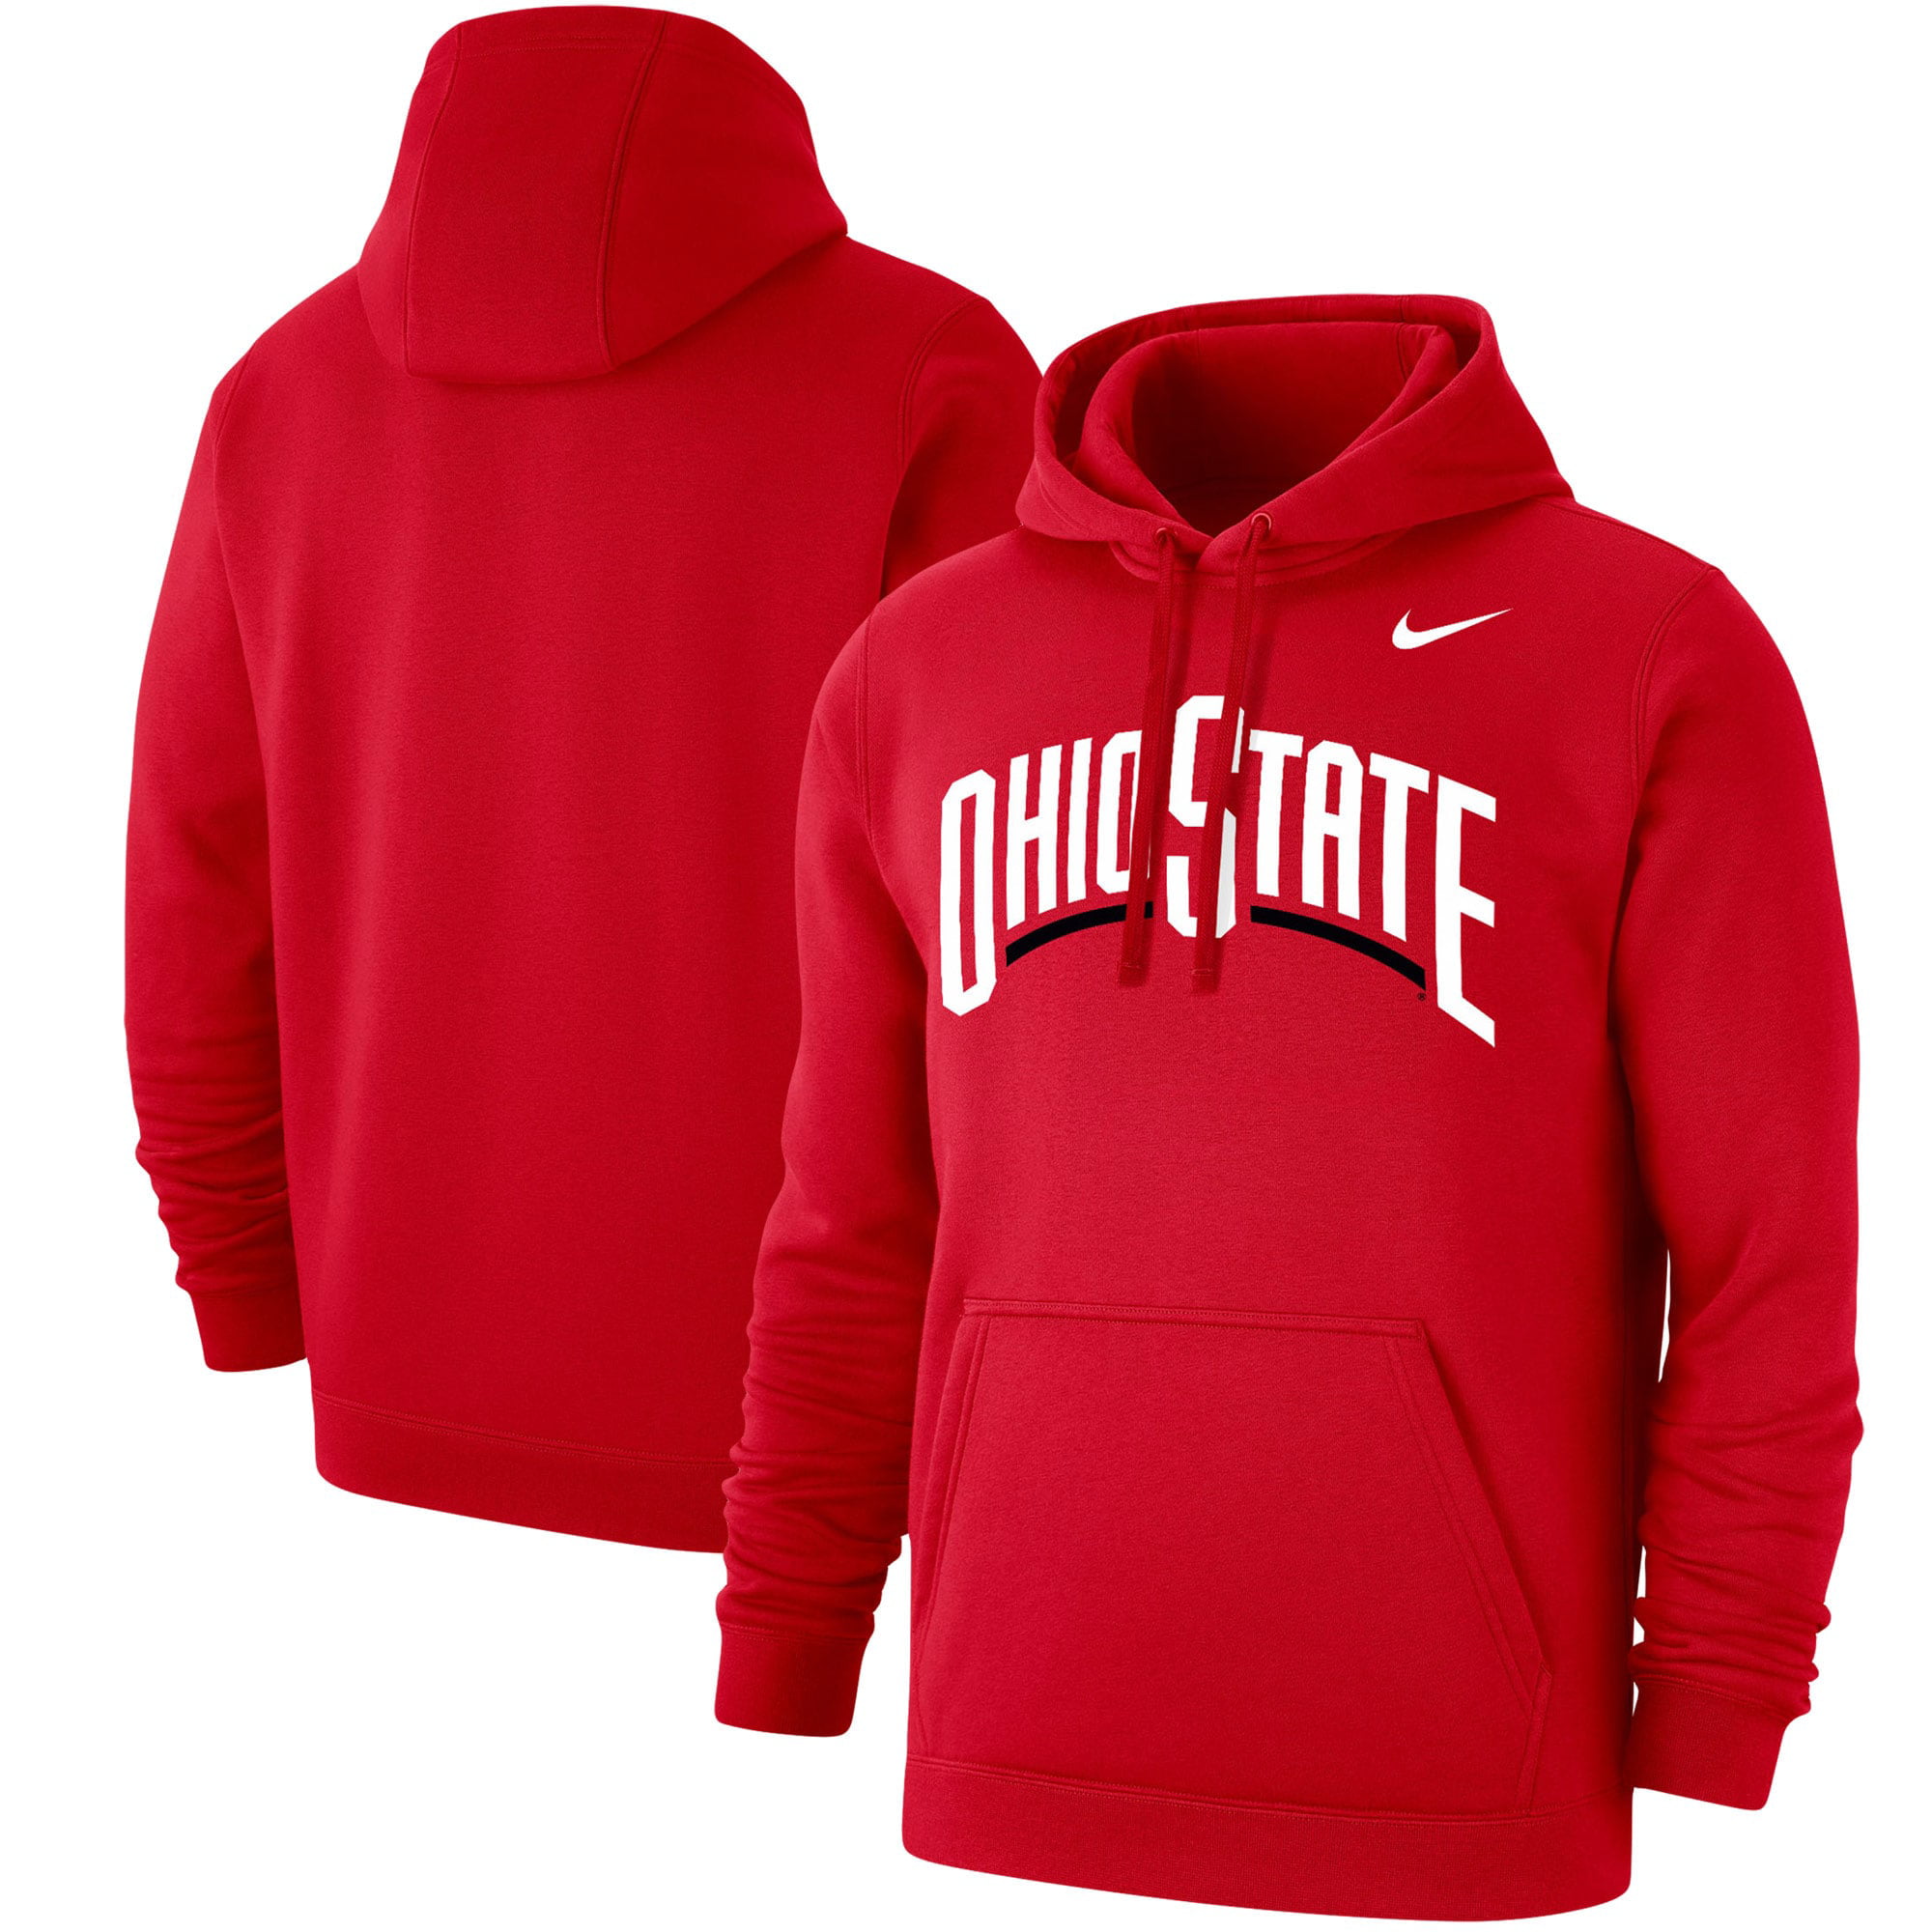 Sweater Cardigan Size M Ohio State University Buckeyes Big Logo Red Hoodie Sweatshirt Jumper